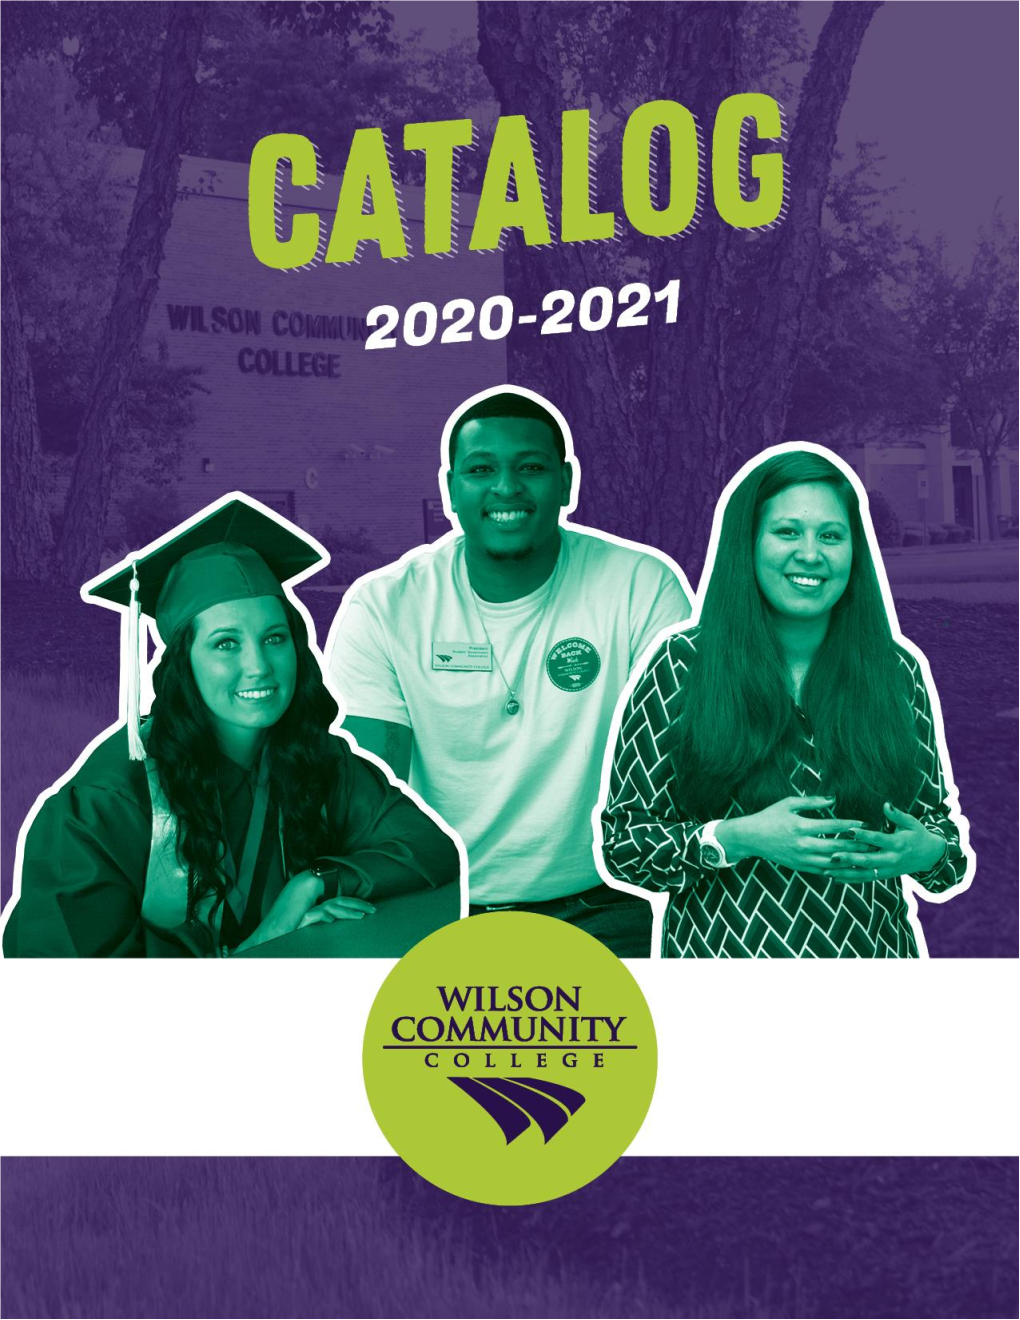 2020-2021 Catalog